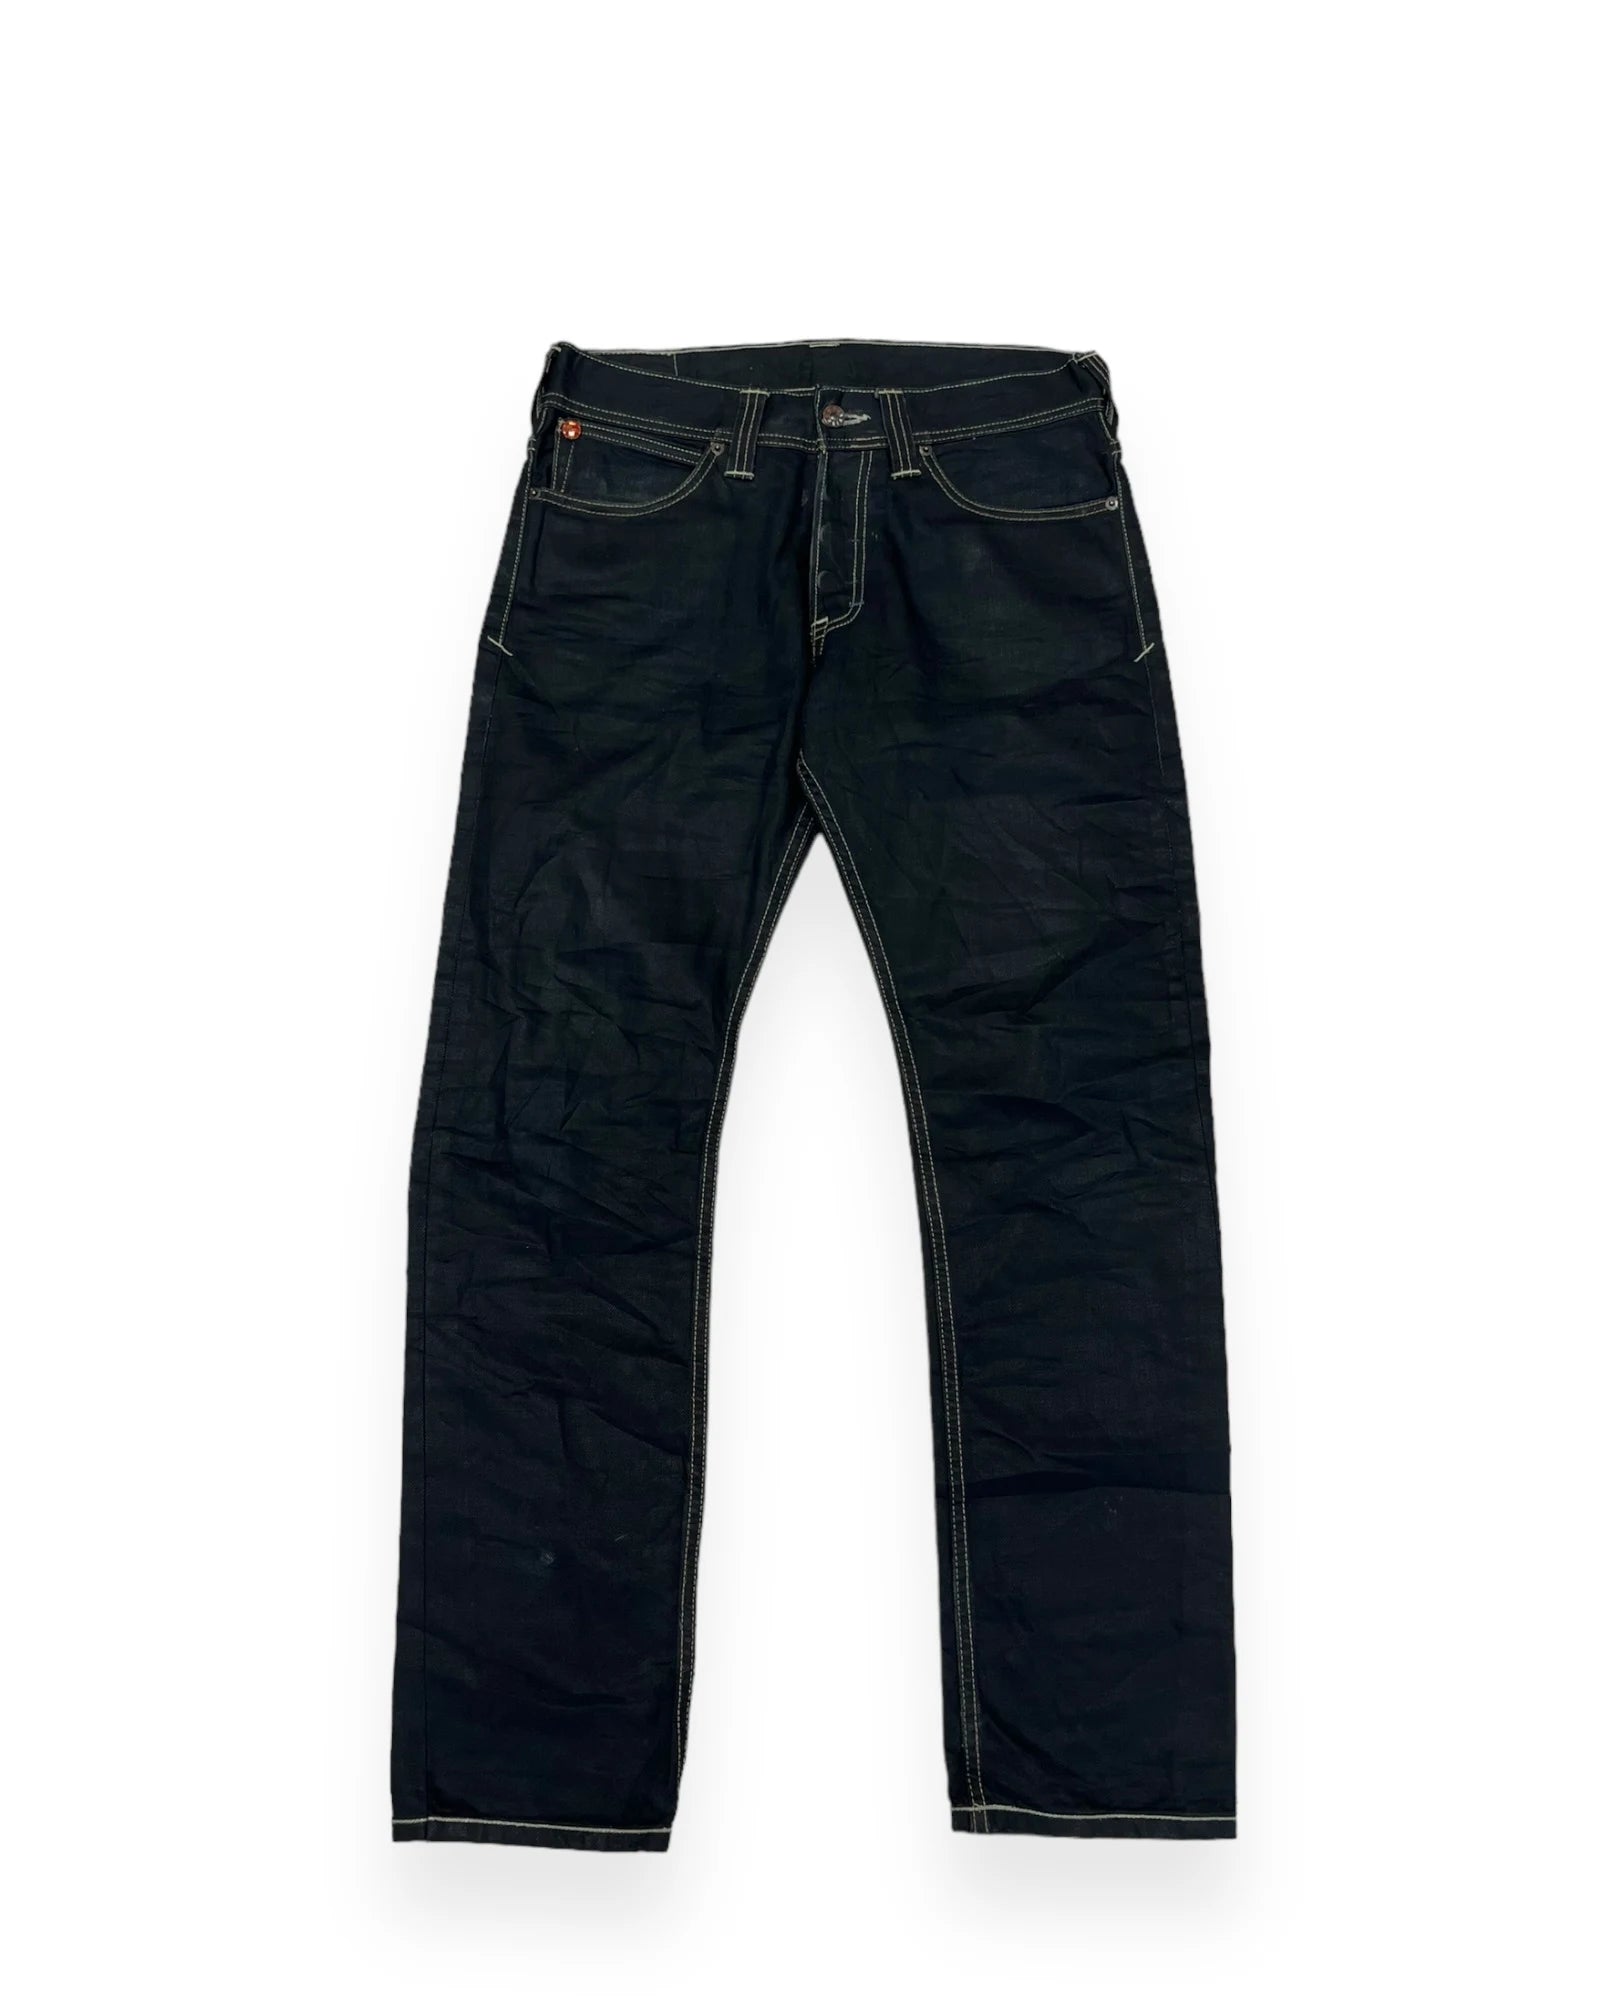 Evisu Jeans - 32W32L 